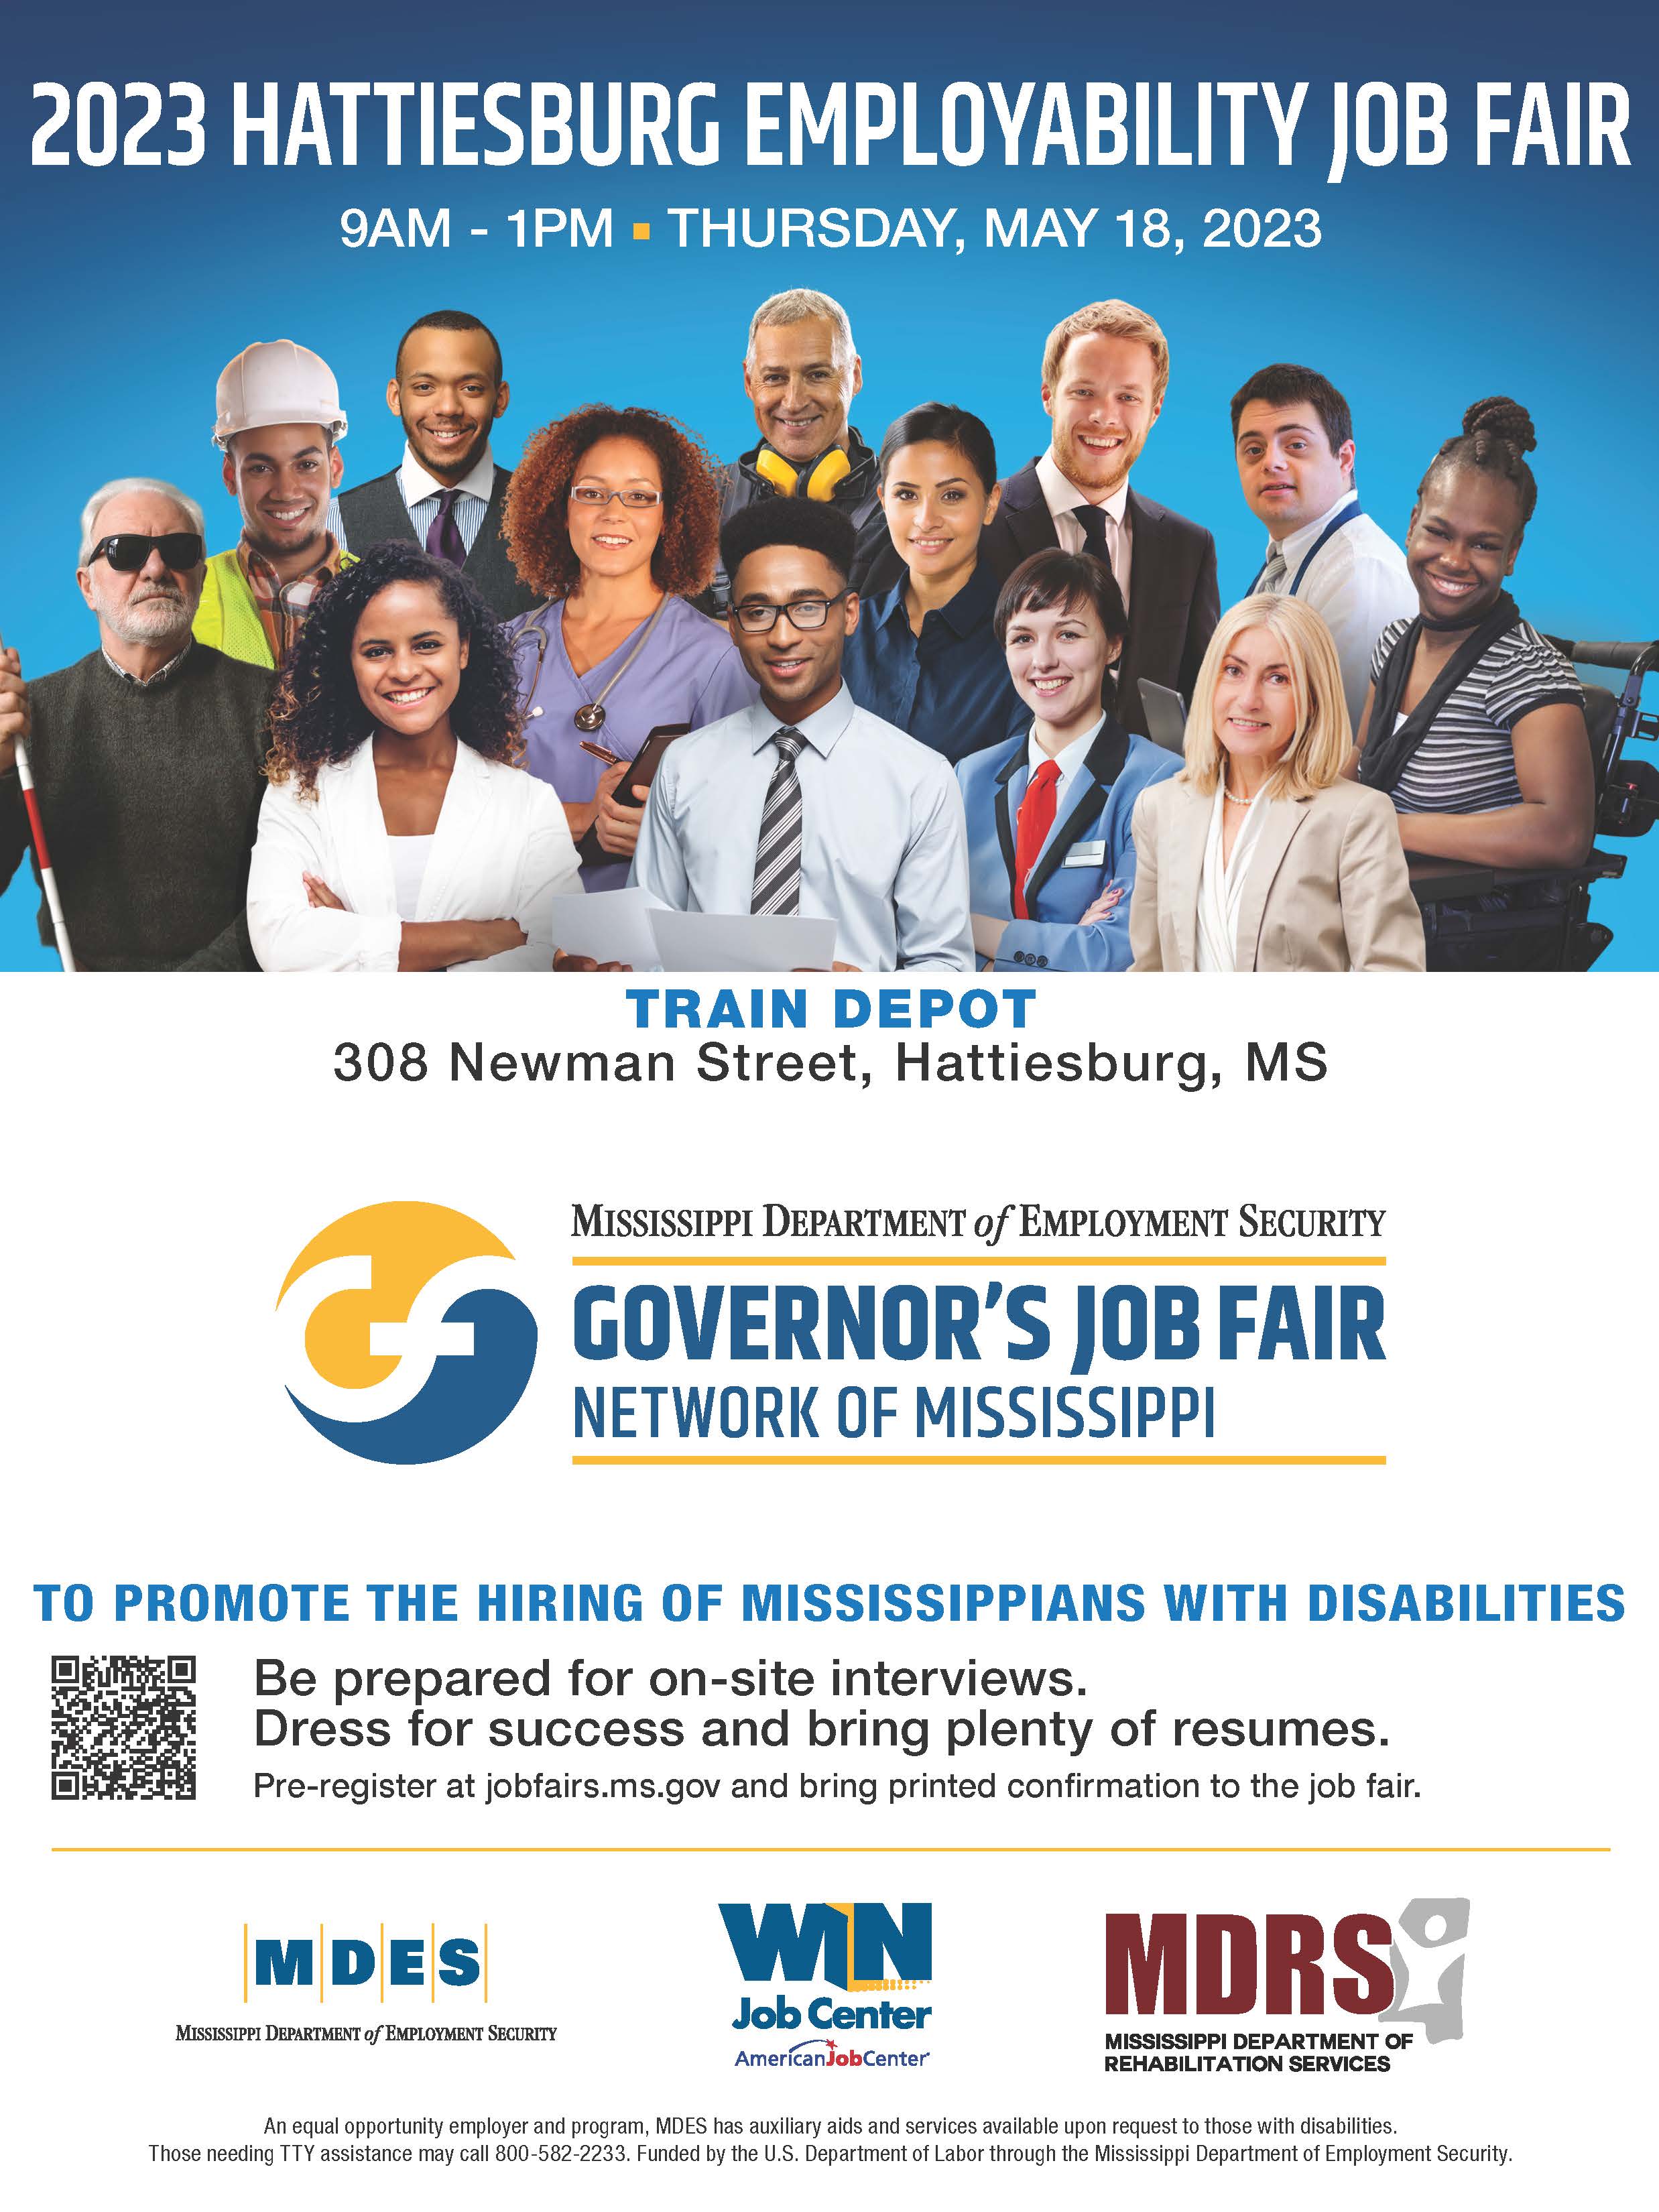 Hattiesburg Employability Job Fair mdrs